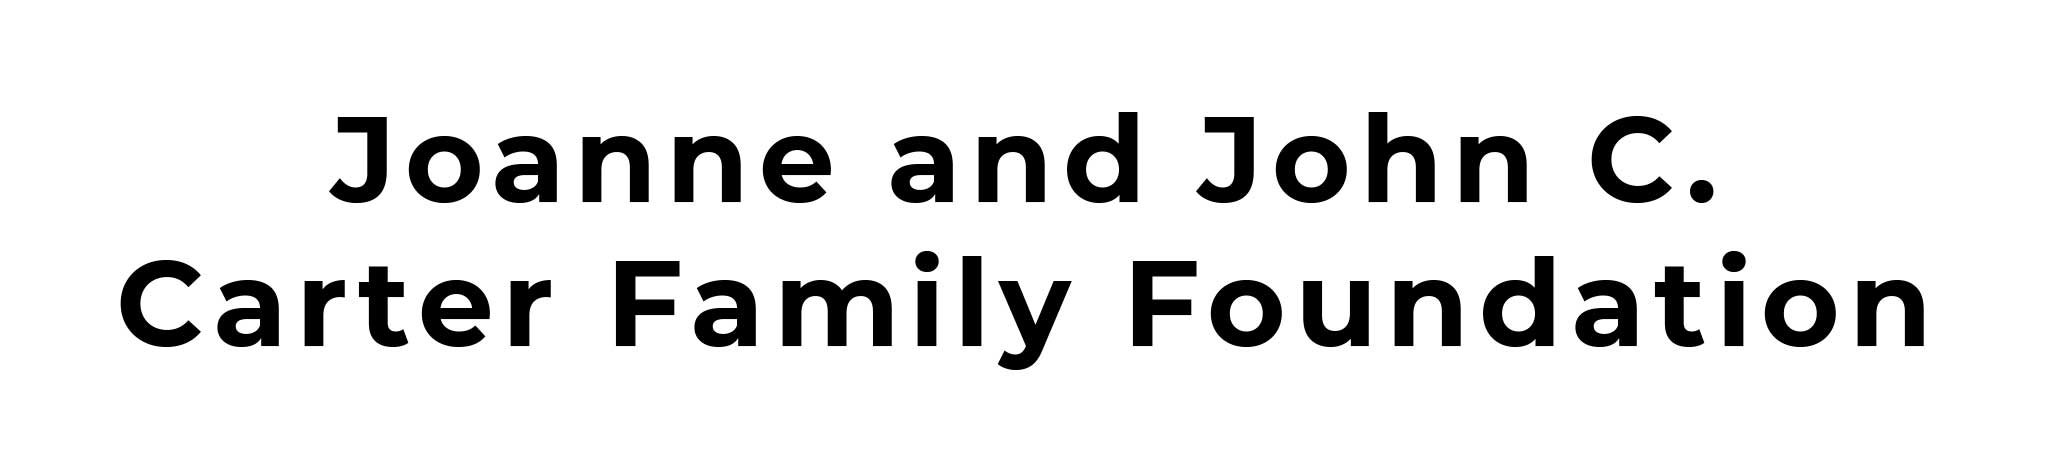 Joanne-and-john-c-carter-family-foundation